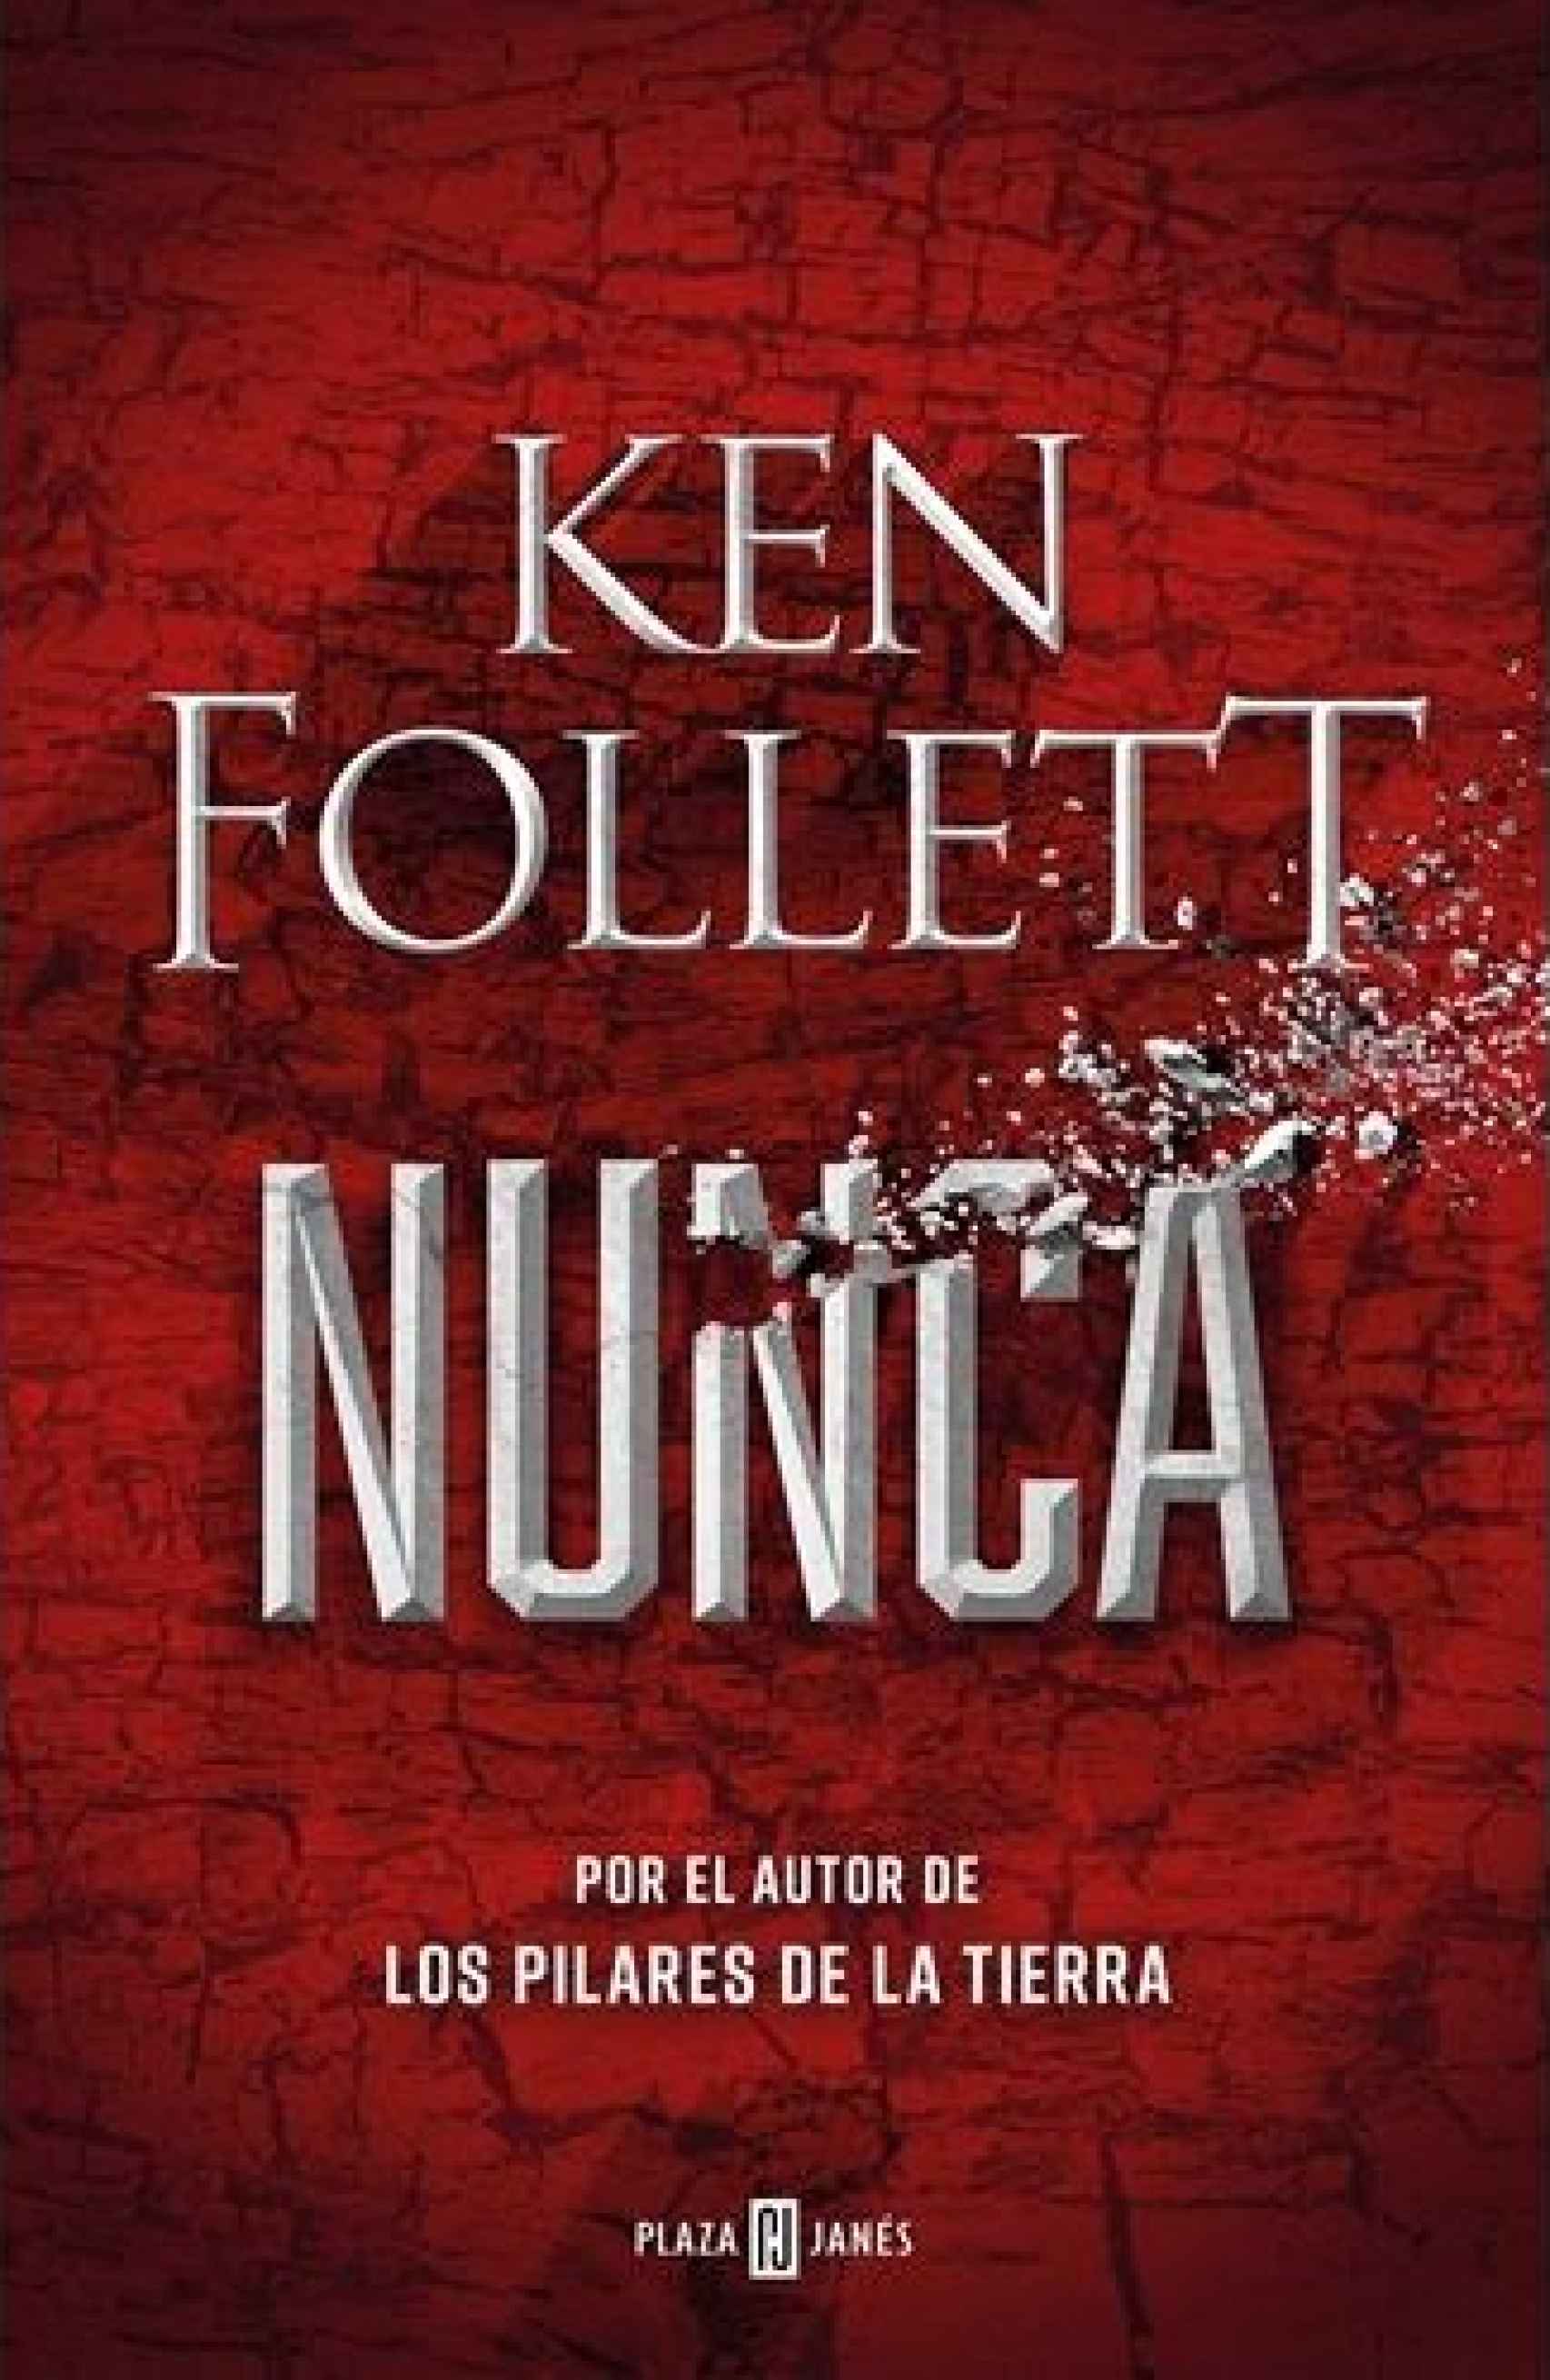 Portada de 'Nunca', la nueva novela de Ken Follett.